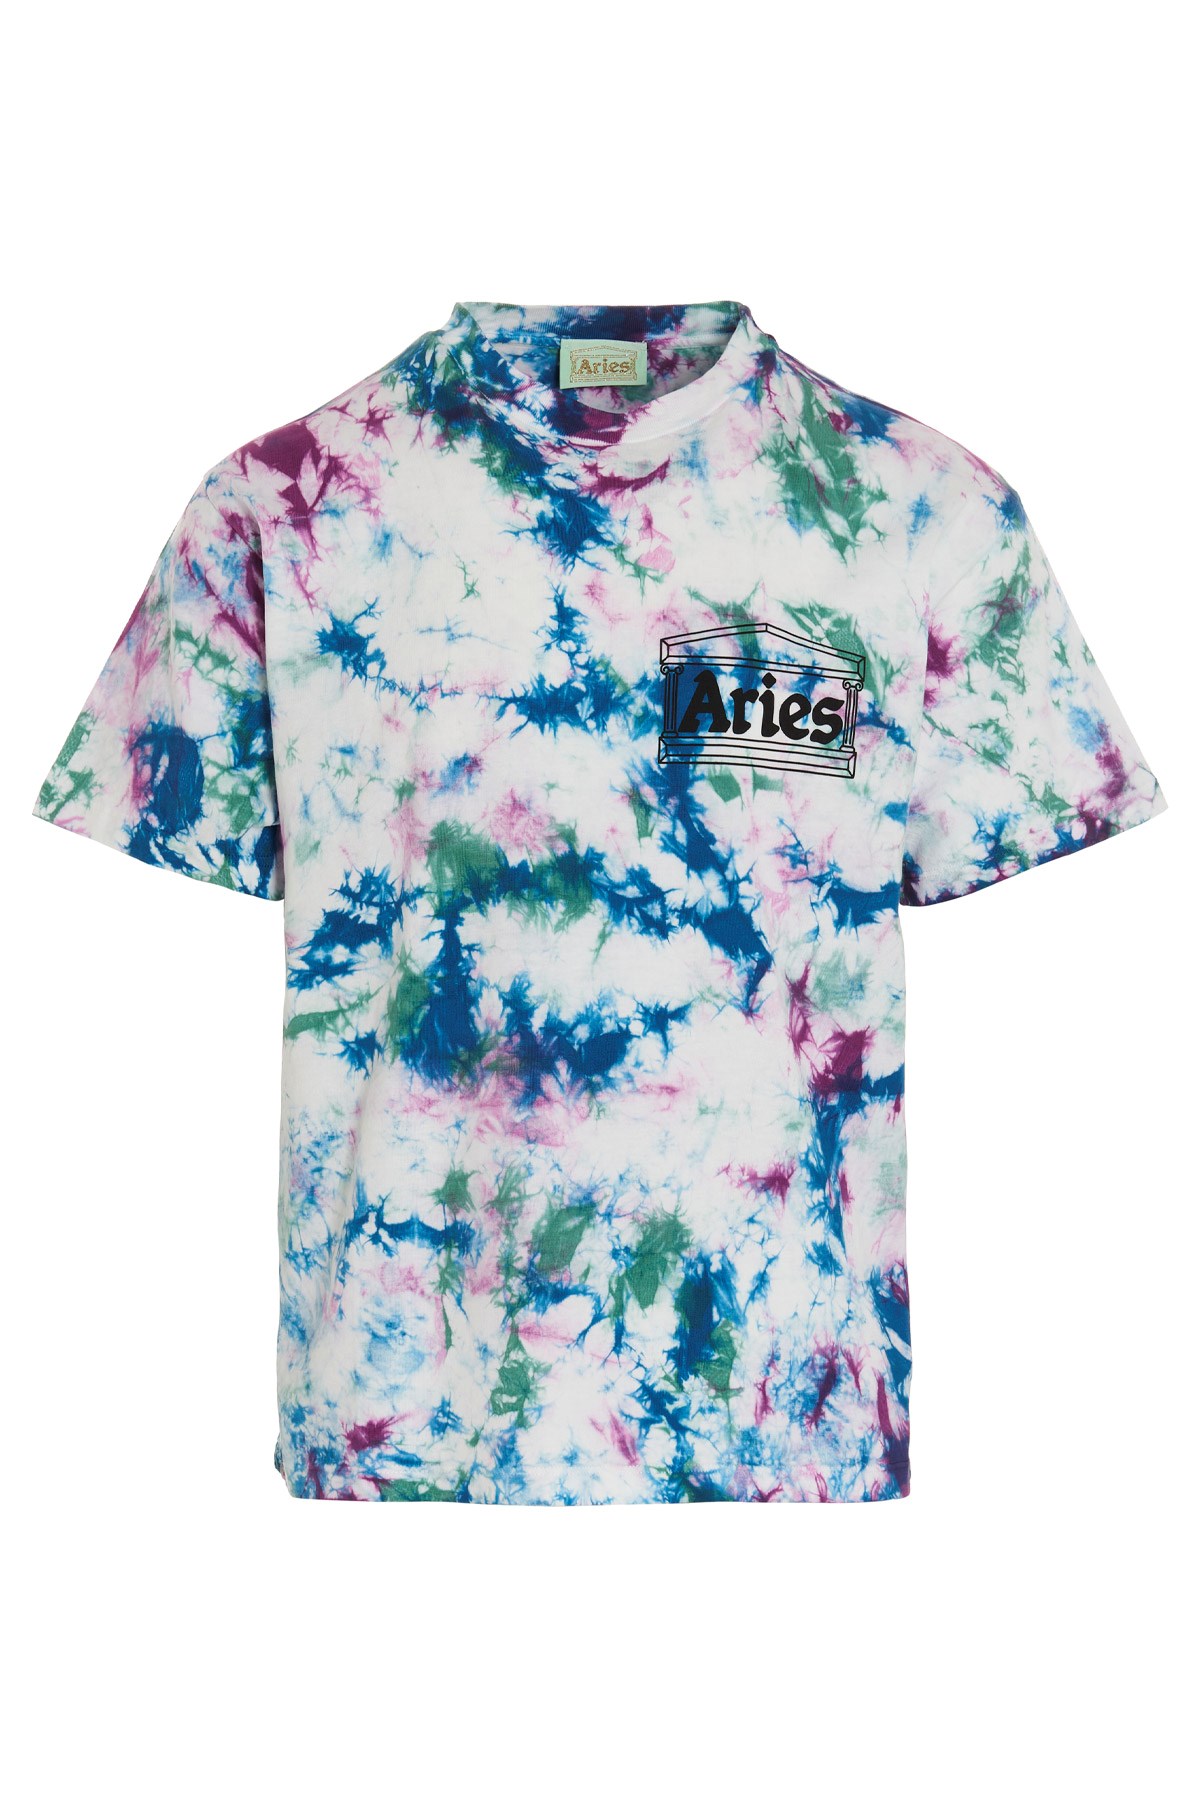 ARIES Tie-Dye T-Shirt